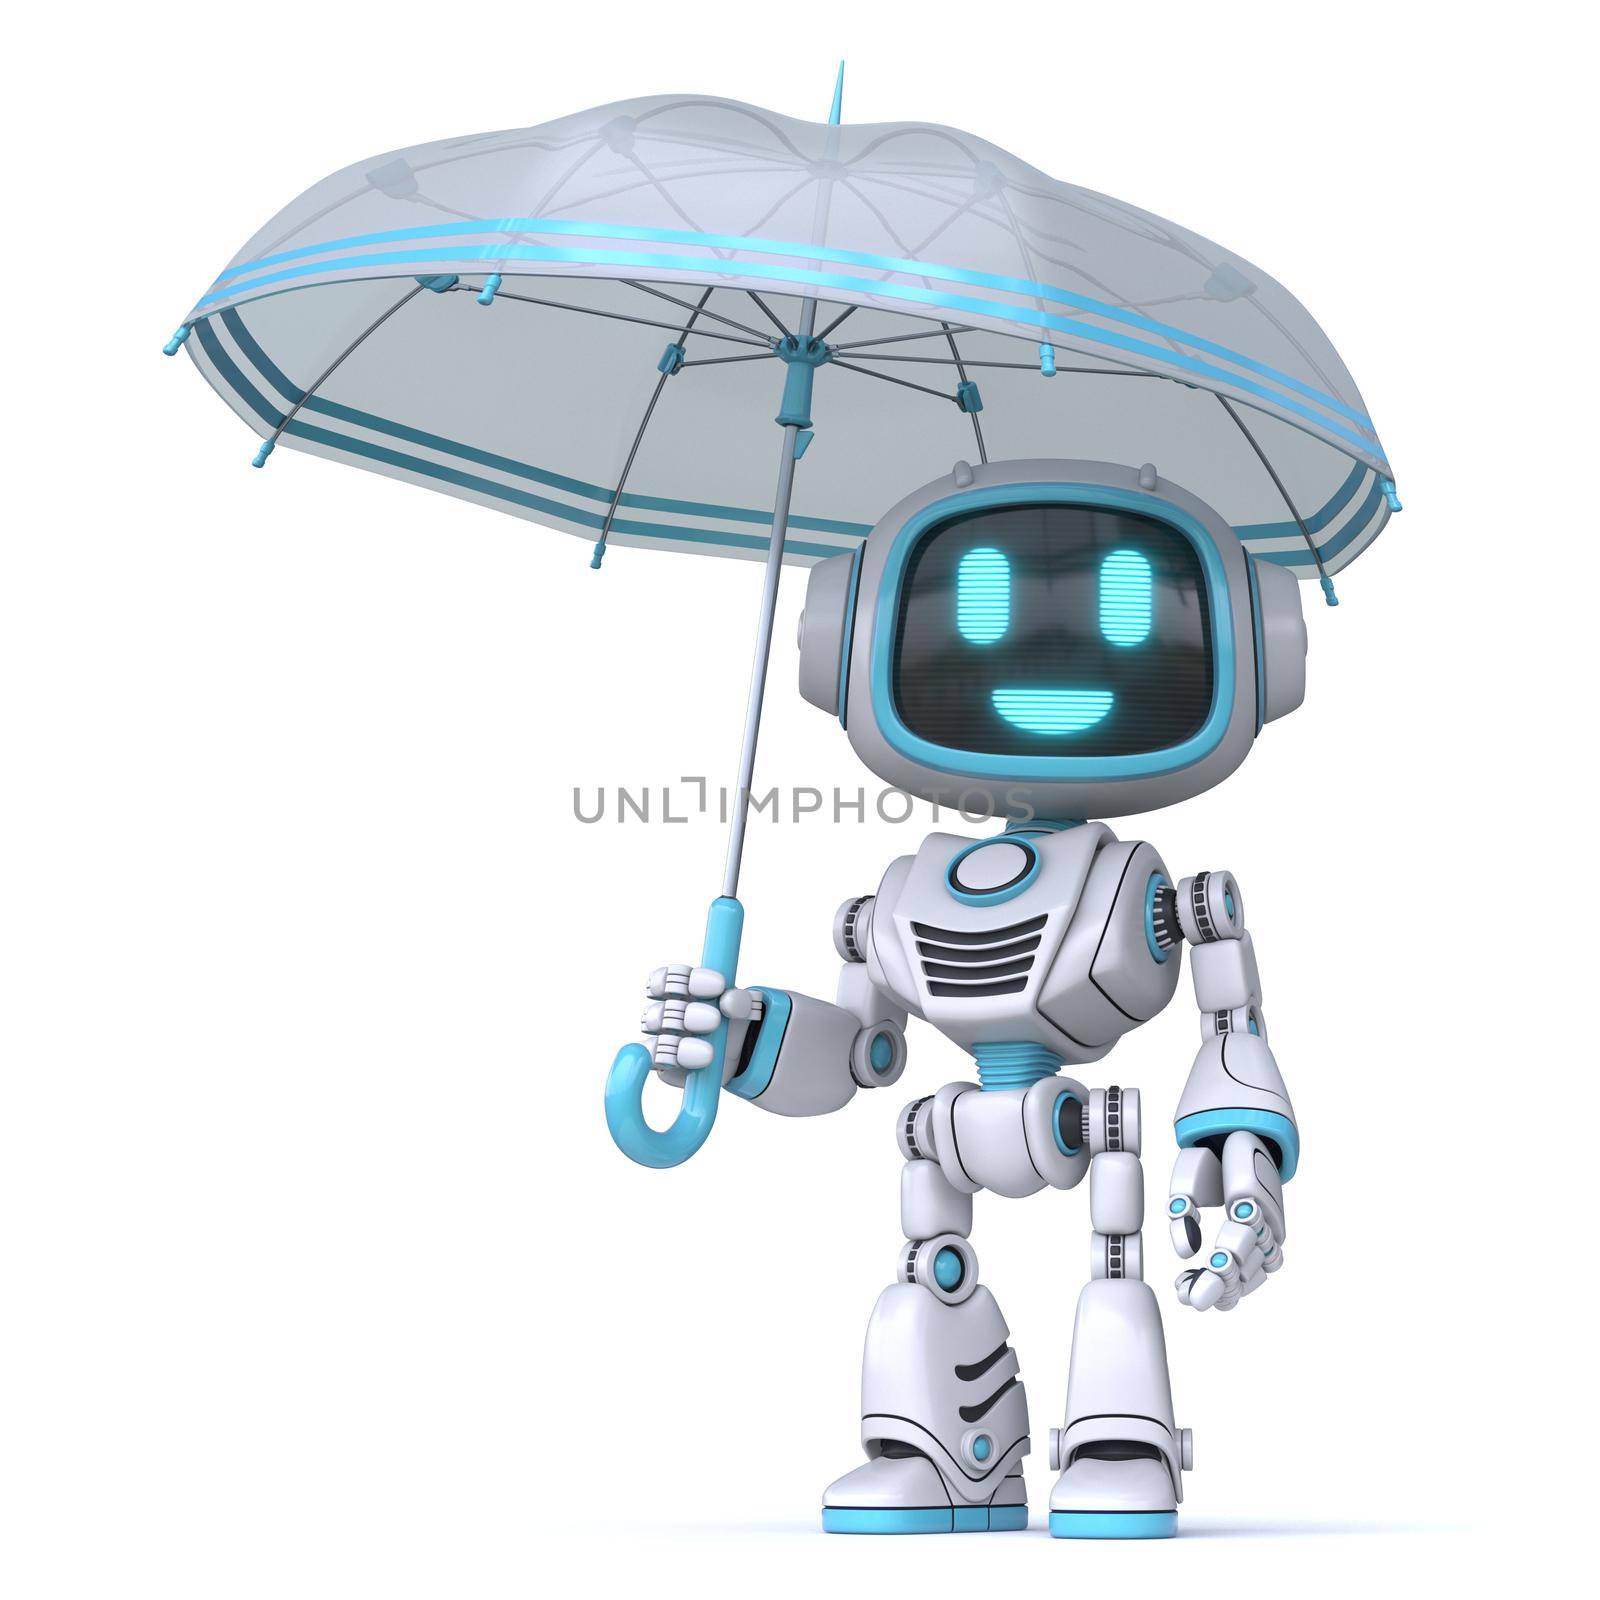 Cute blue robot holding umbrella 3D by djmilic